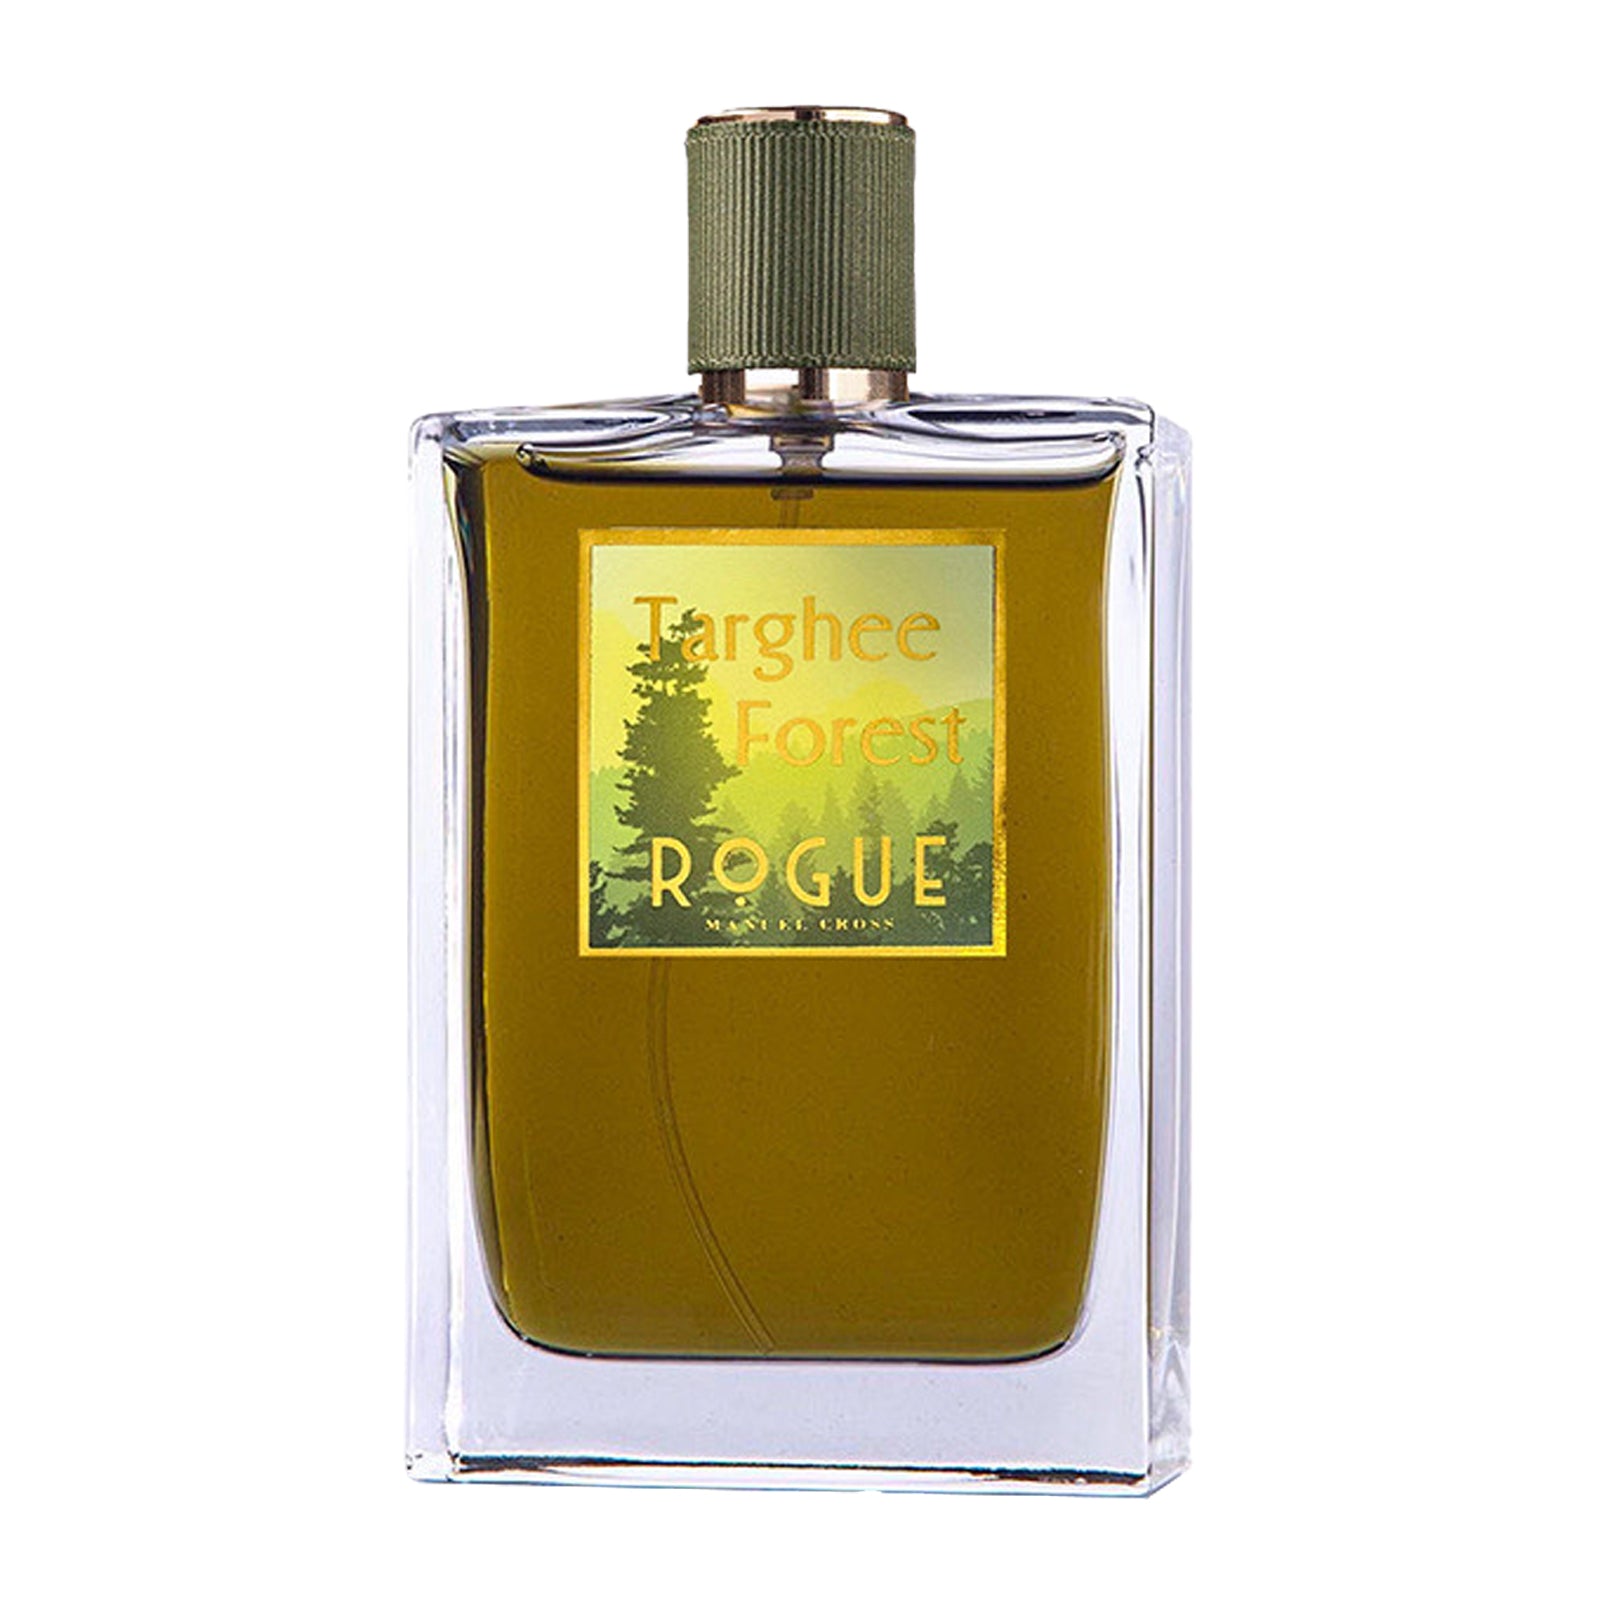 Image of Rogue Perfumery Targhee Forest Eau de Toilette